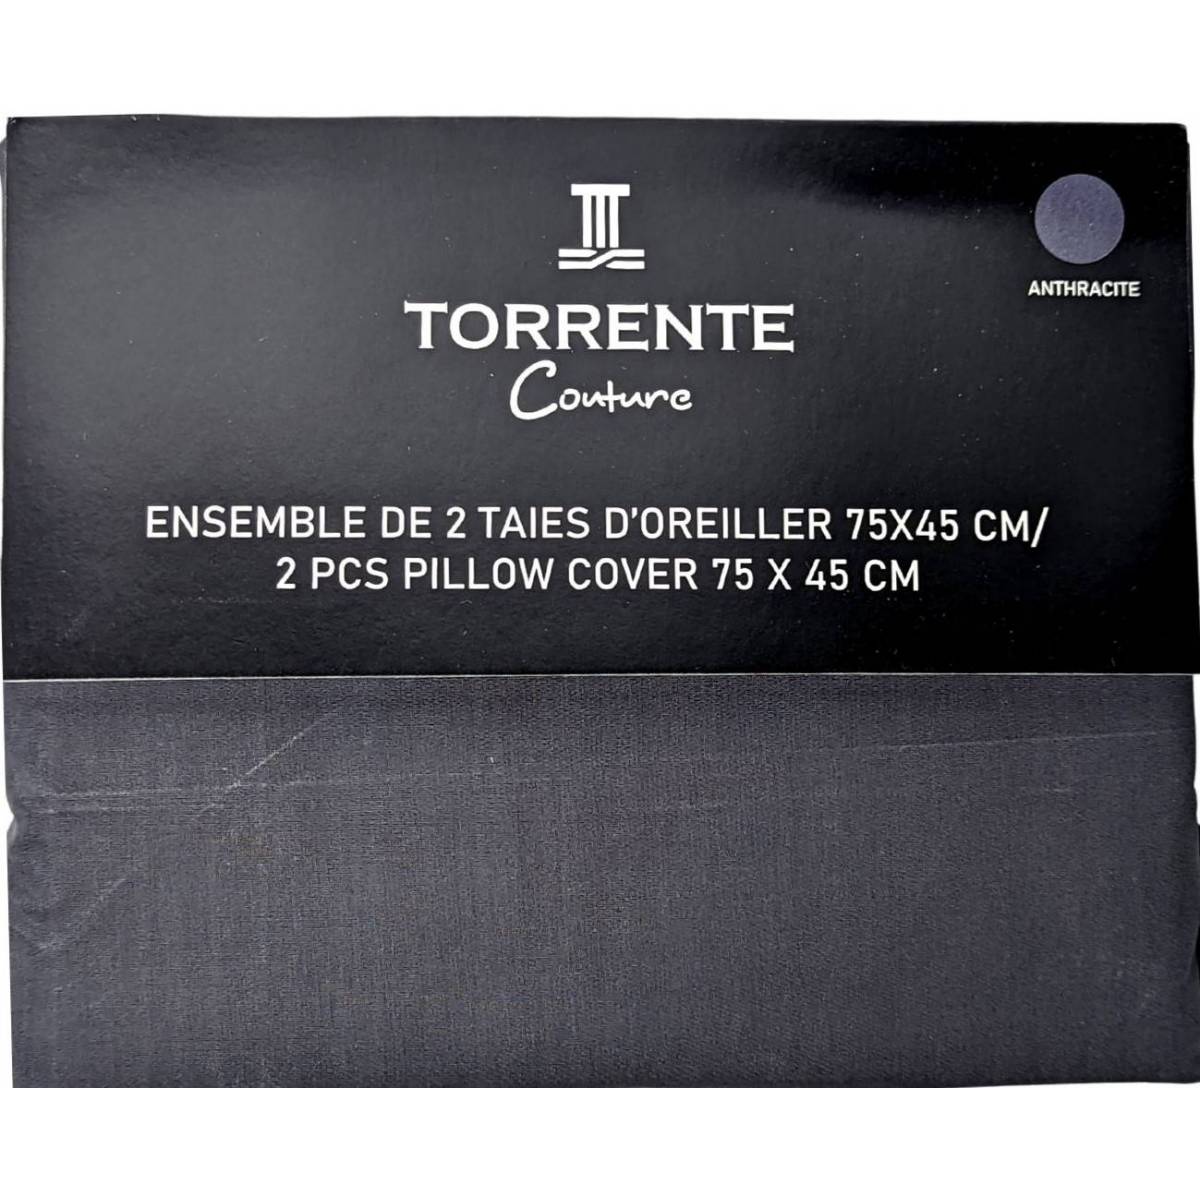 Taie d'oreiller Torrente Anthracite 75 x 45 cm